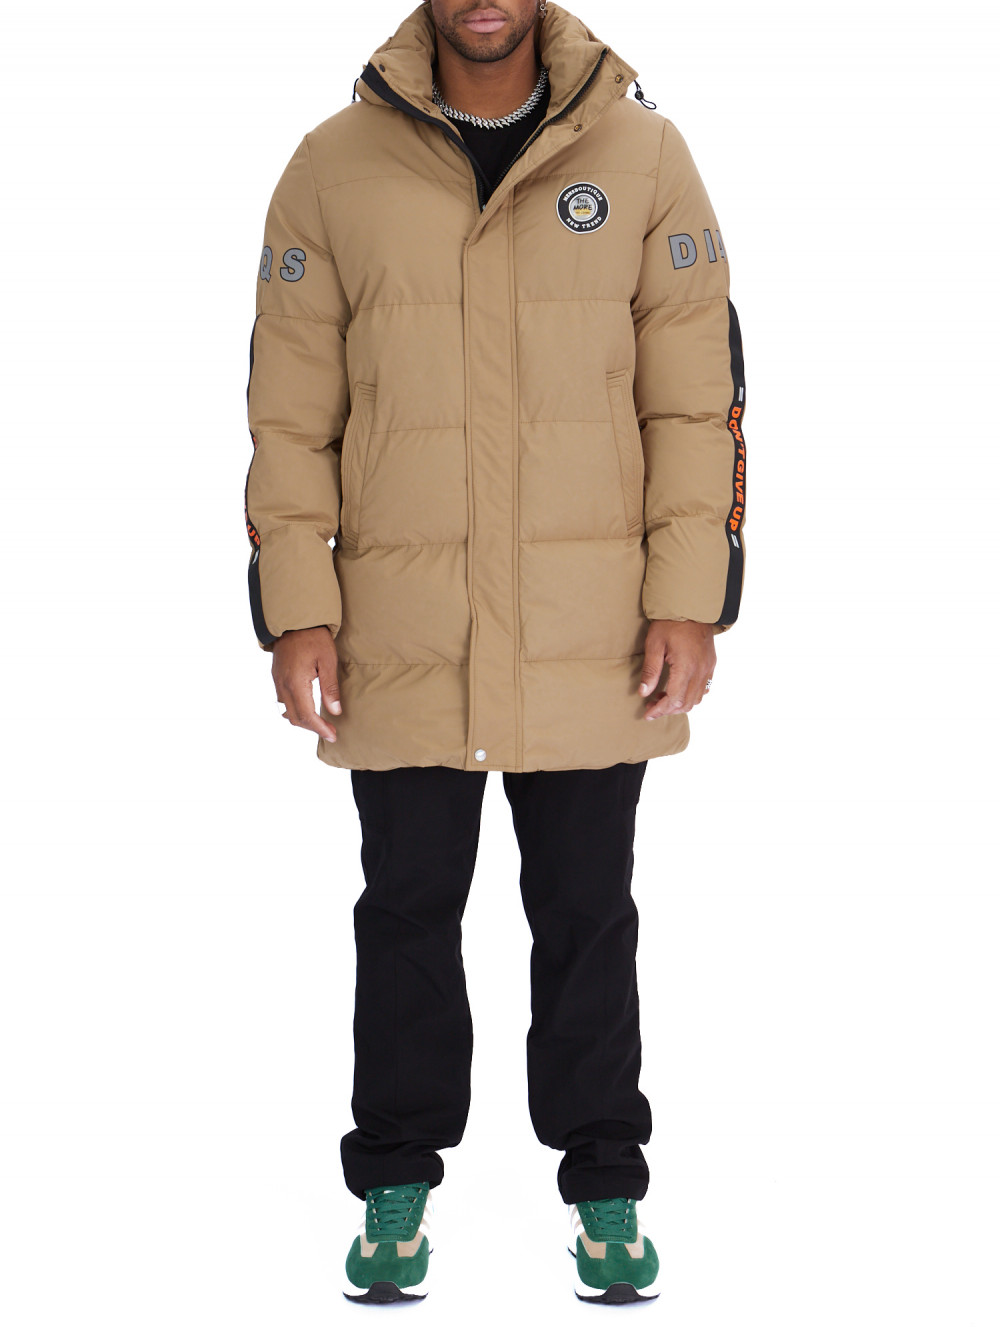 Спортивная куртка мужская NoBrand AD90006 бежевая XL